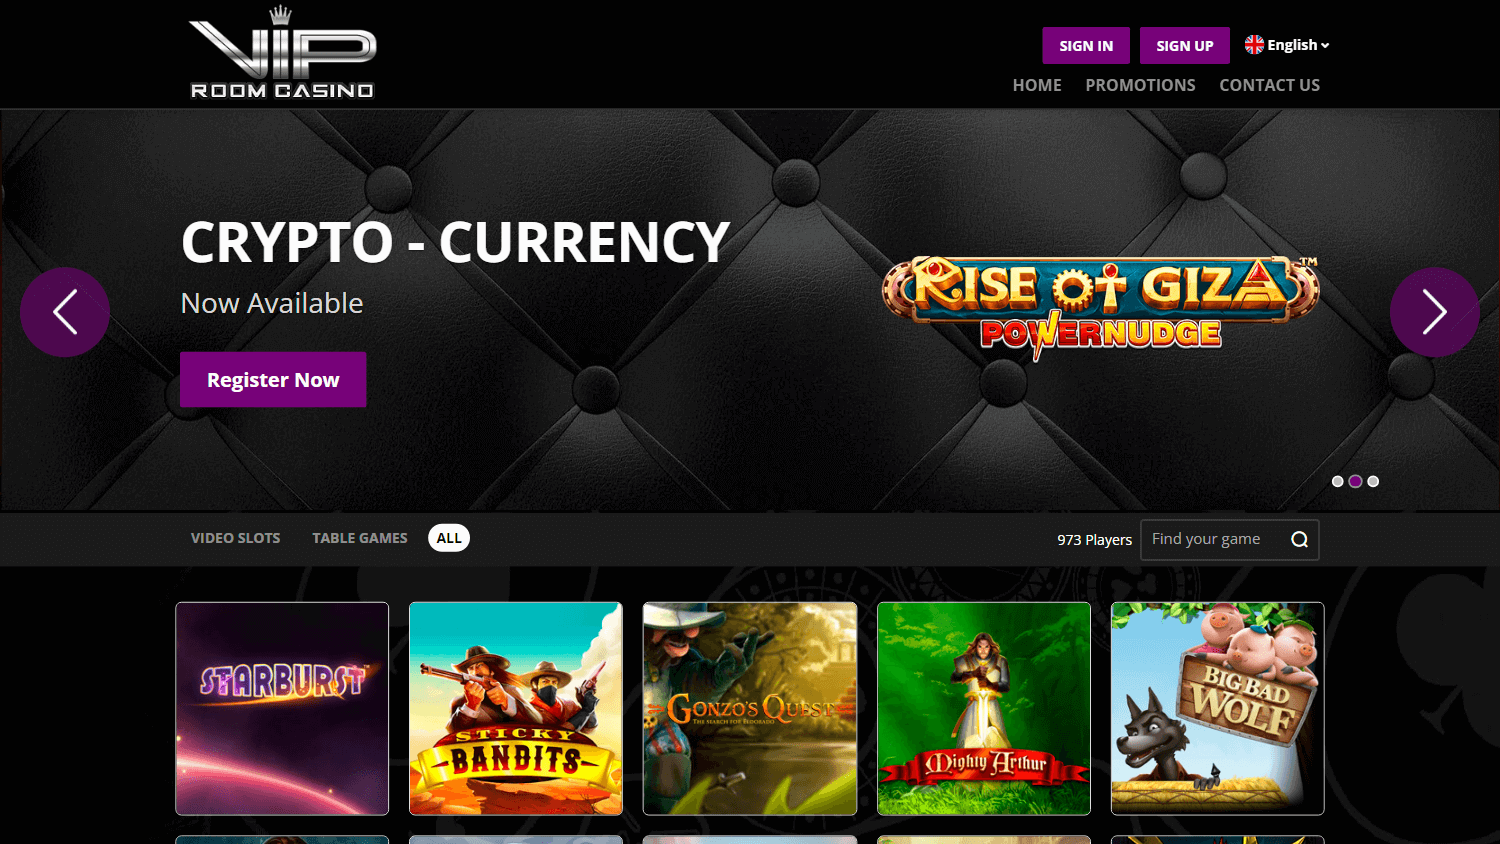 vip_room_casino_homepage_desktop